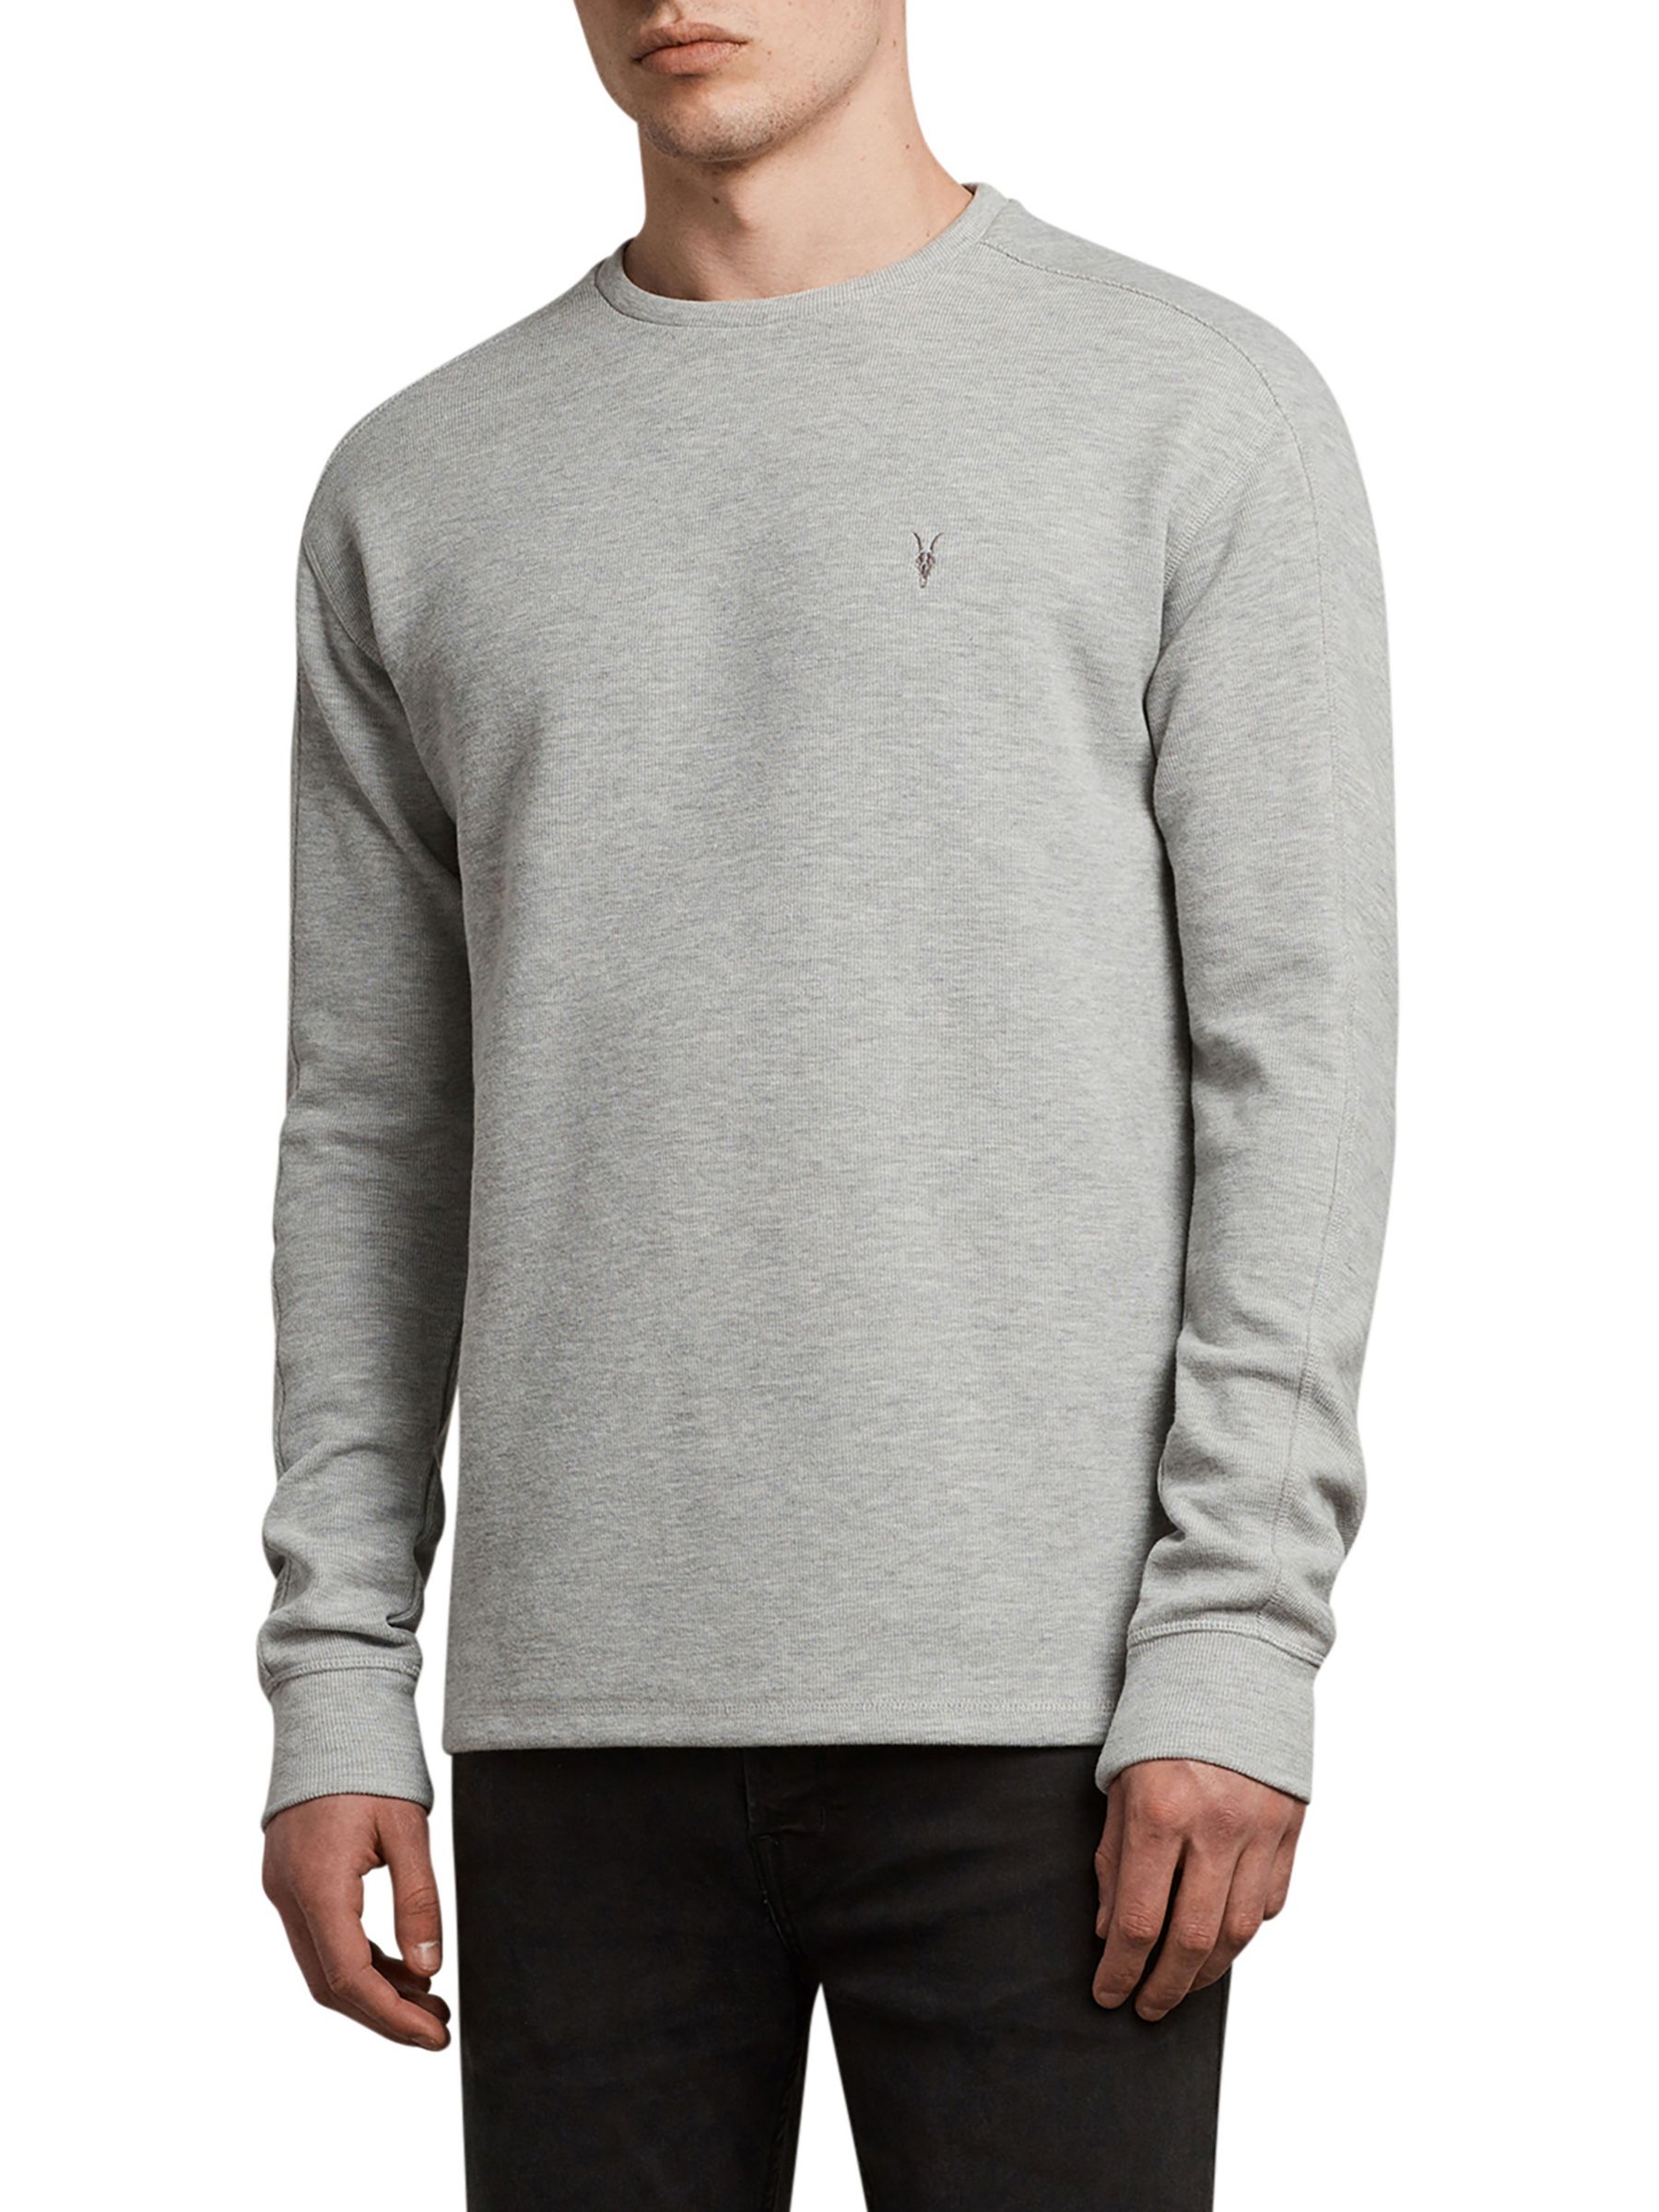 AllSaints Kruse Long Sleeve Sweatshirt, Grey Marl